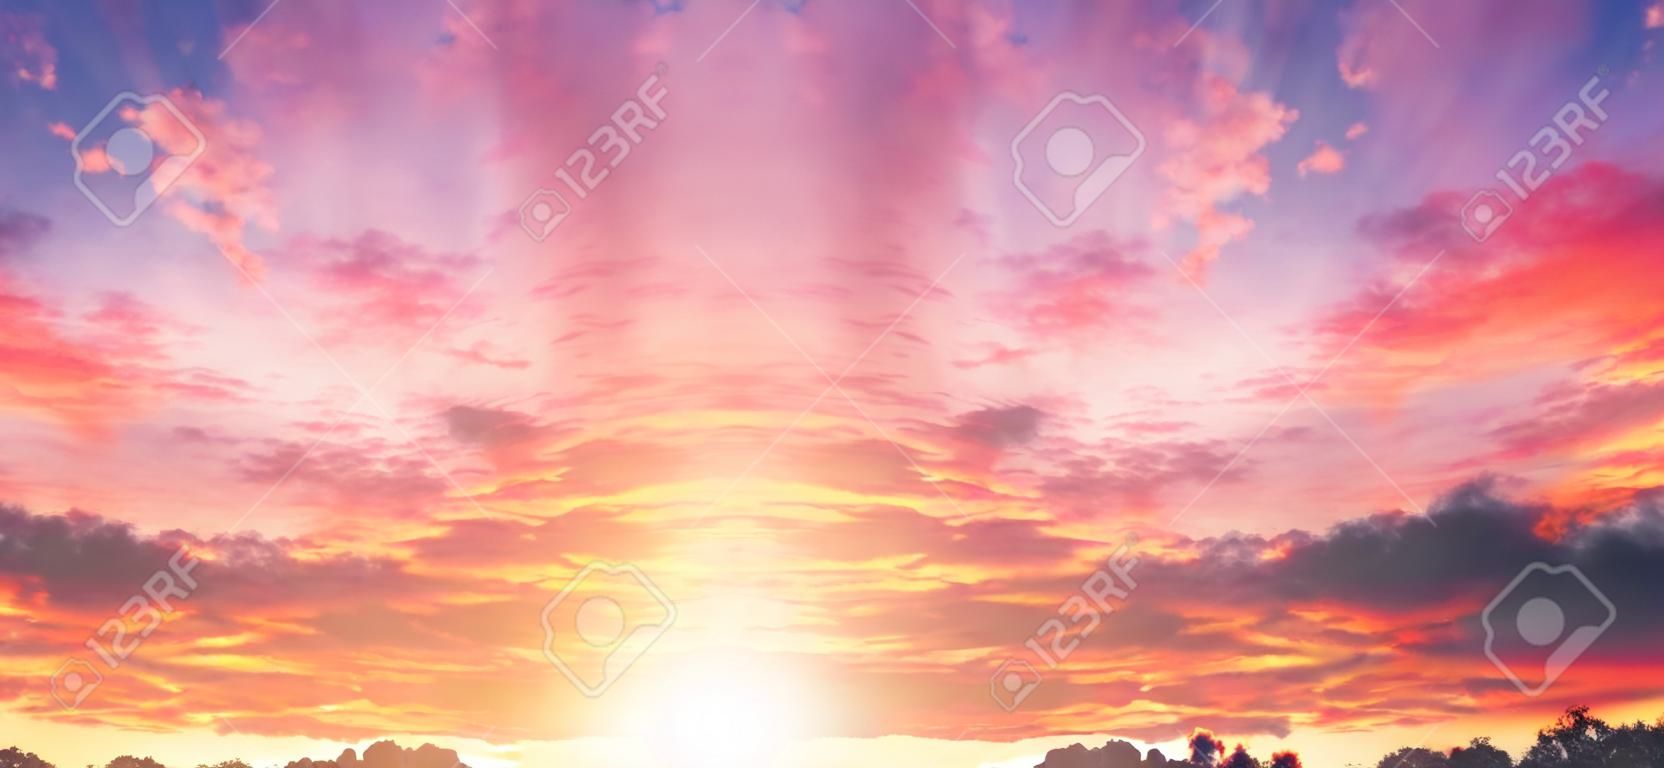 Earth day concept: Fiery orange sunset sky